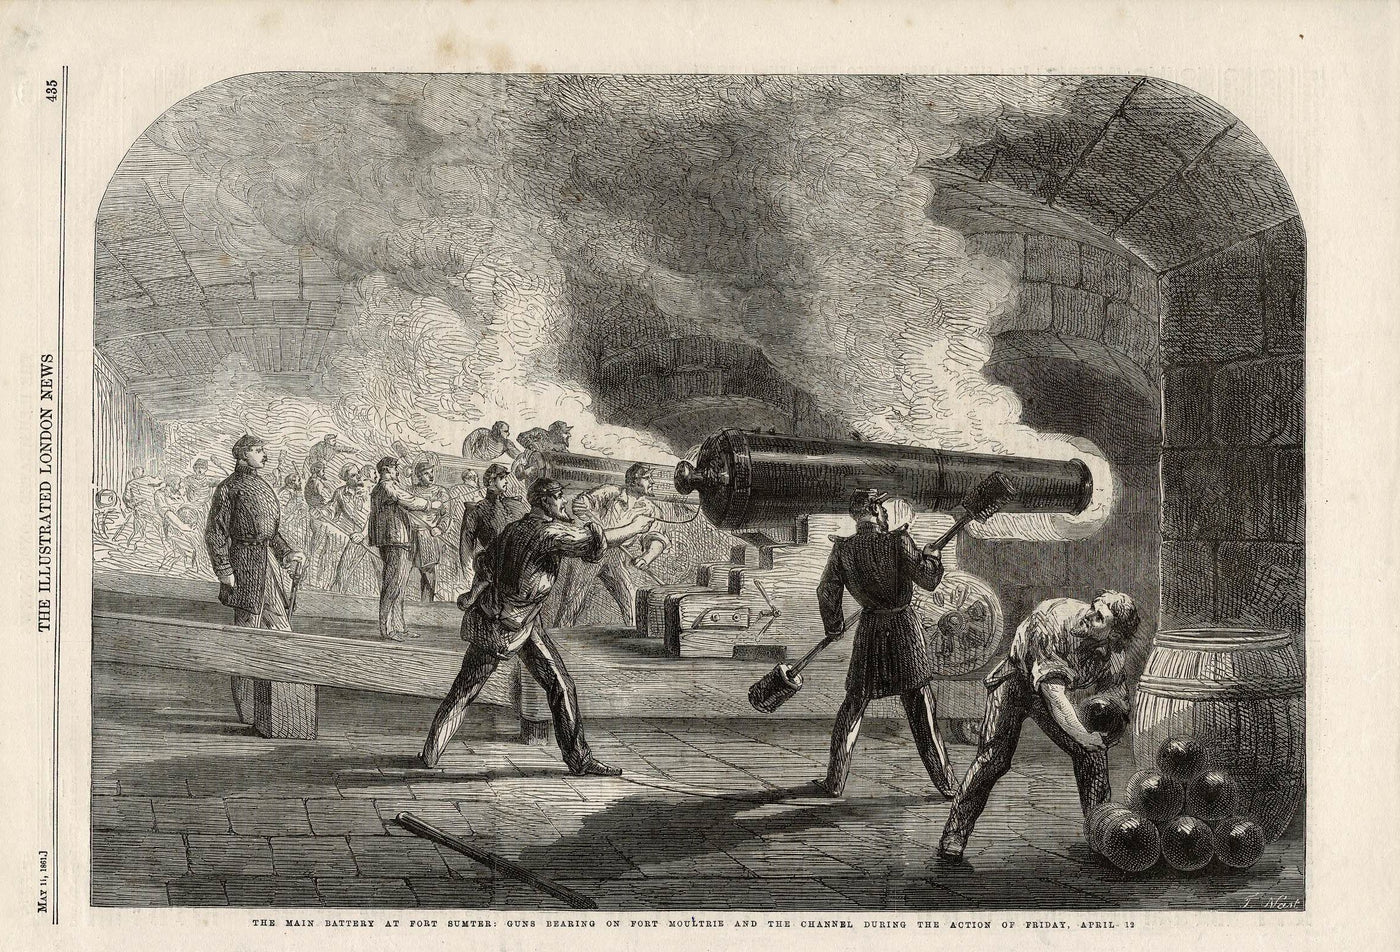 Fort Sumter main battery antique print 1861